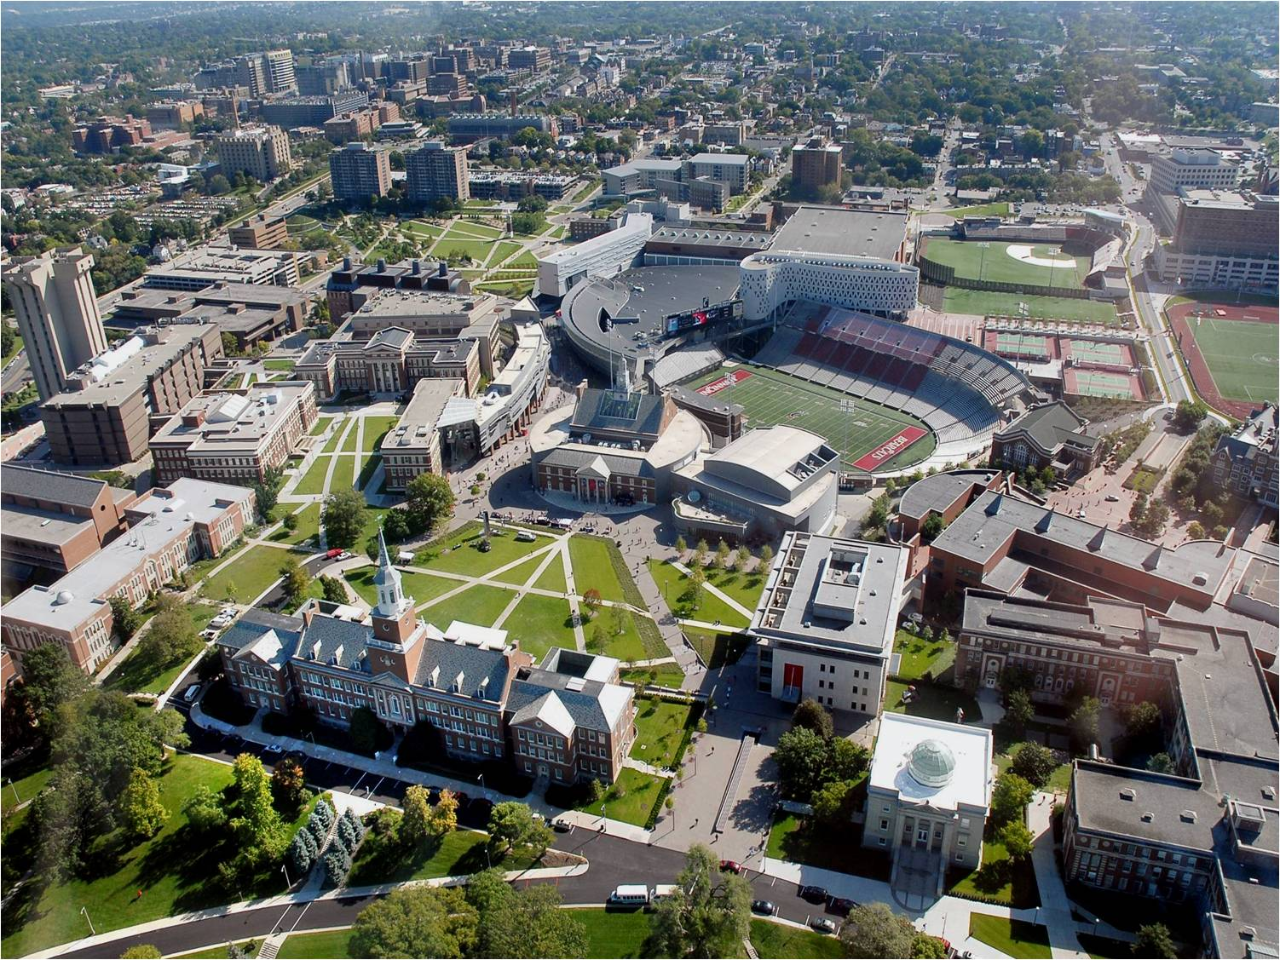 University of Cincinnati Uptown campus